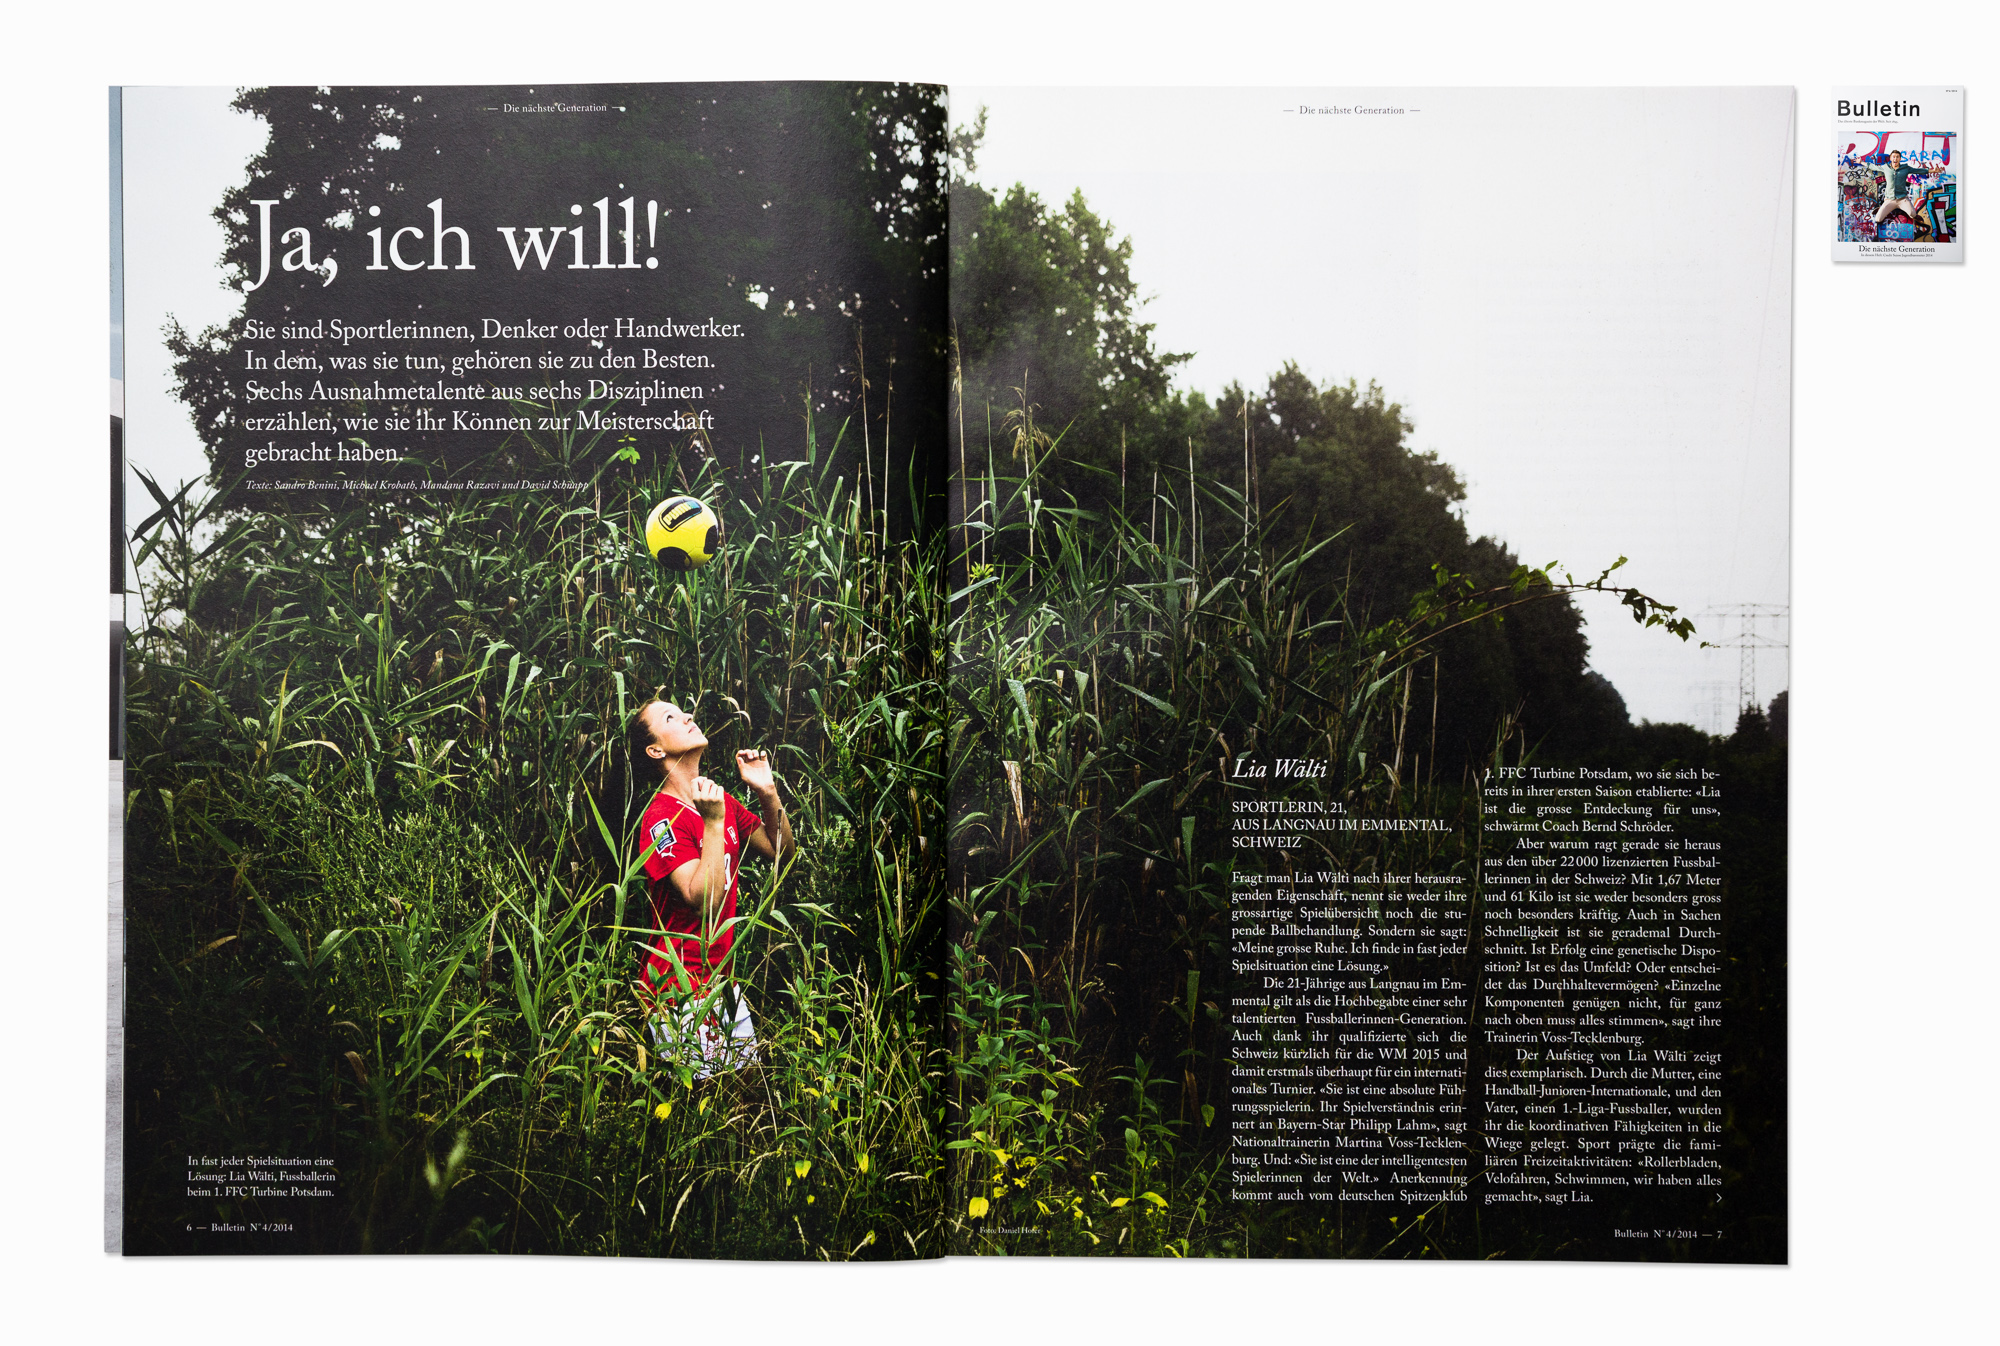   Soccer player Lia Waelti for Credit Suisse "Bulletin", Potsdam 2014  